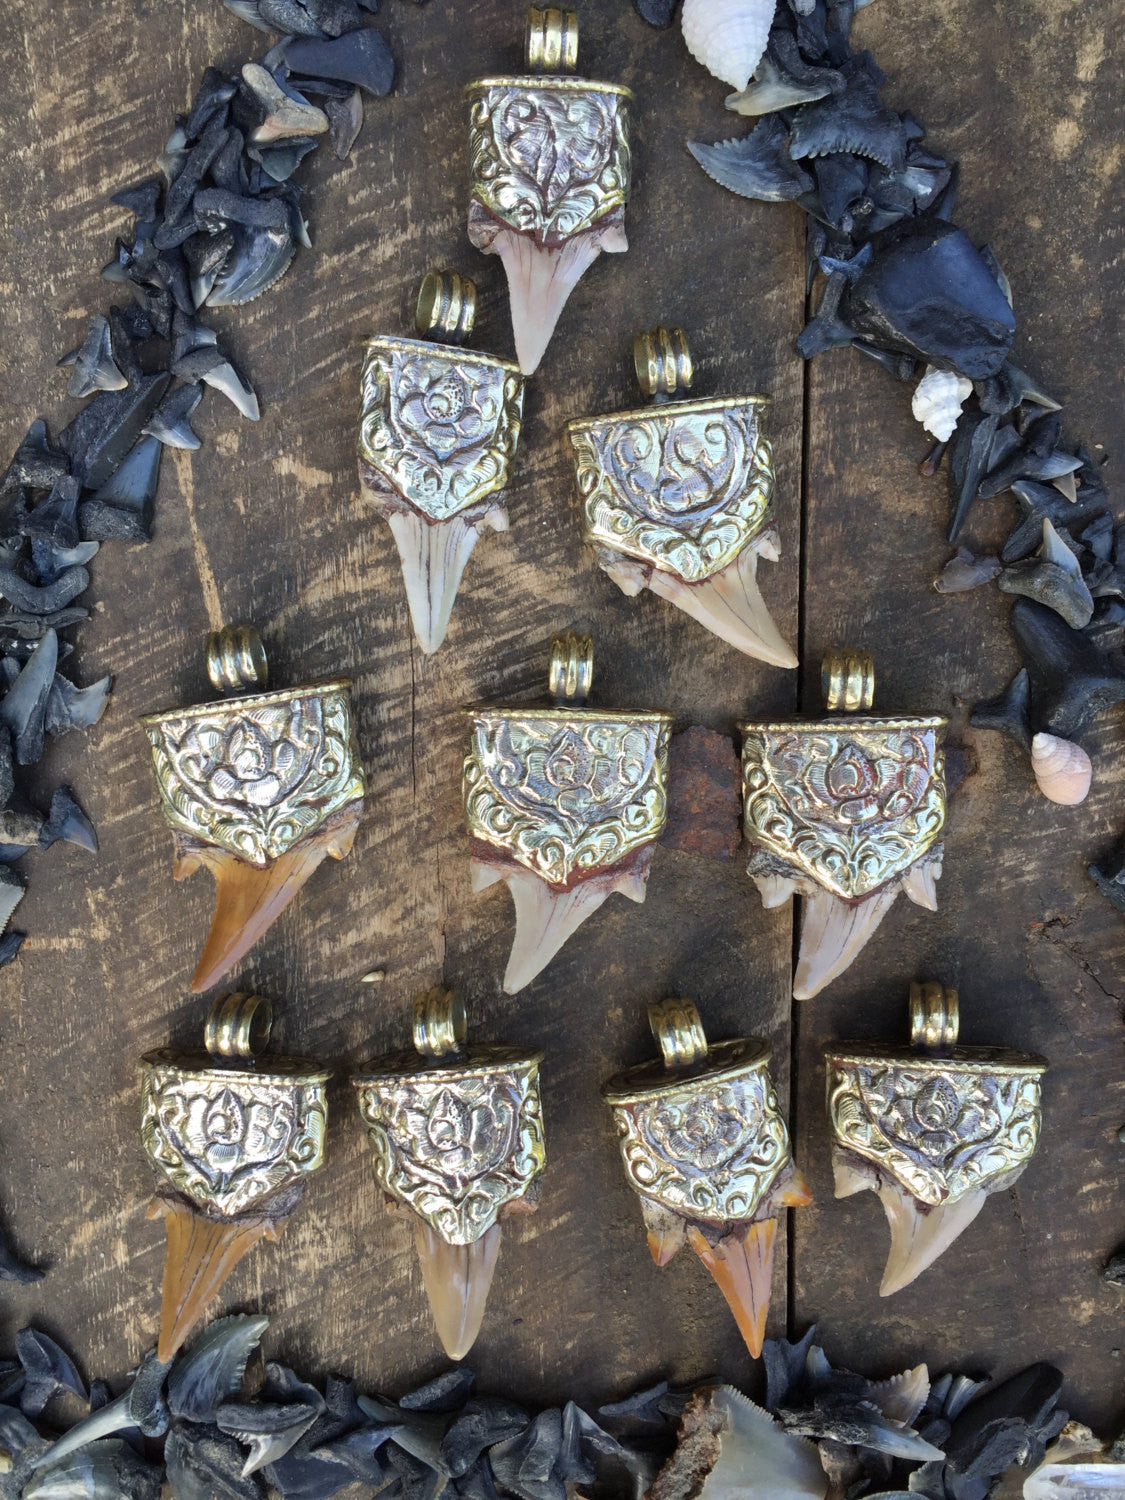 Shark Bite : Natural Shark Tooth, Teeth Pendant with White Brass Caps, 1.25"x3", Summer Beach Style, Designer Jewelry Making Supply, 1 Piece - ShopWomanShopsWorld.com. Bone Beads, Tassels, Pom Poms, African Beads.